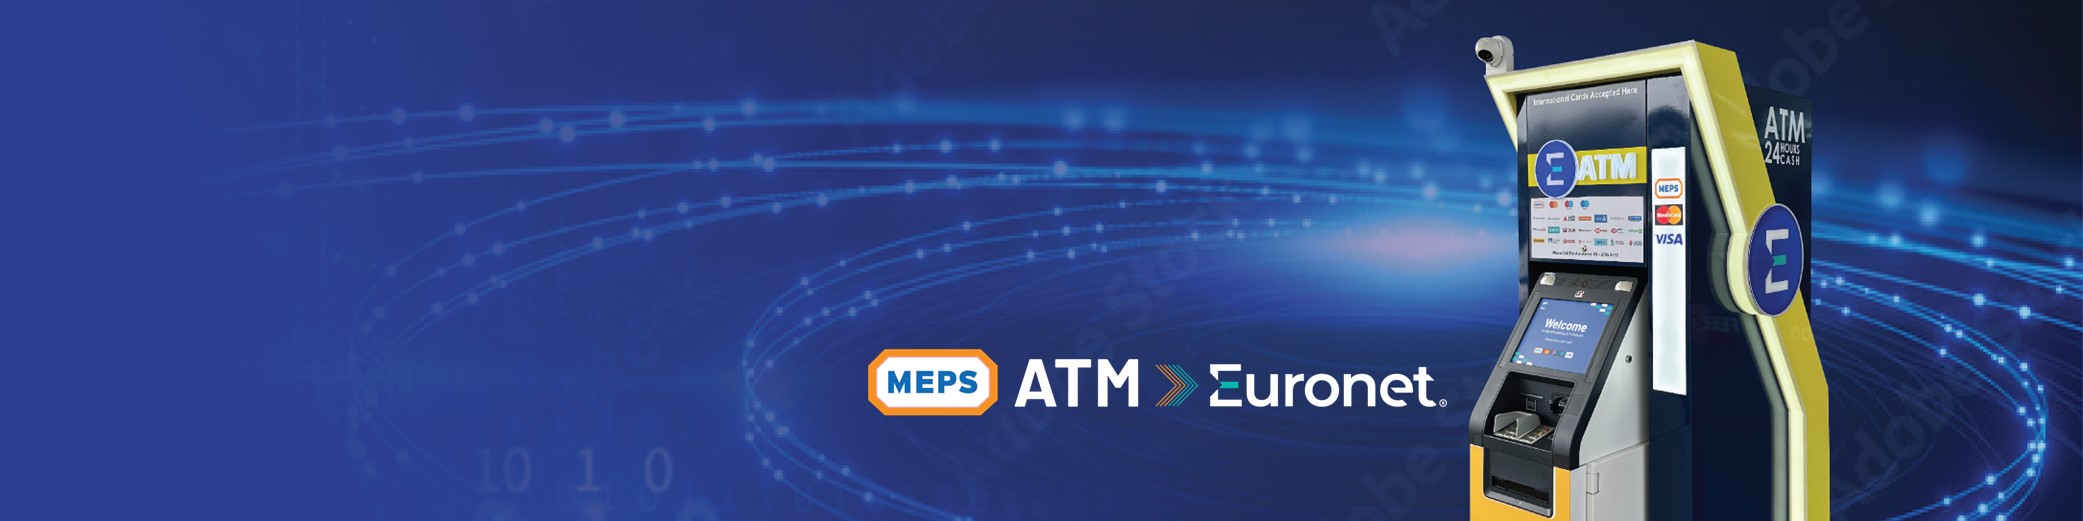 Euronet acquires MEPS ATM Terminals.